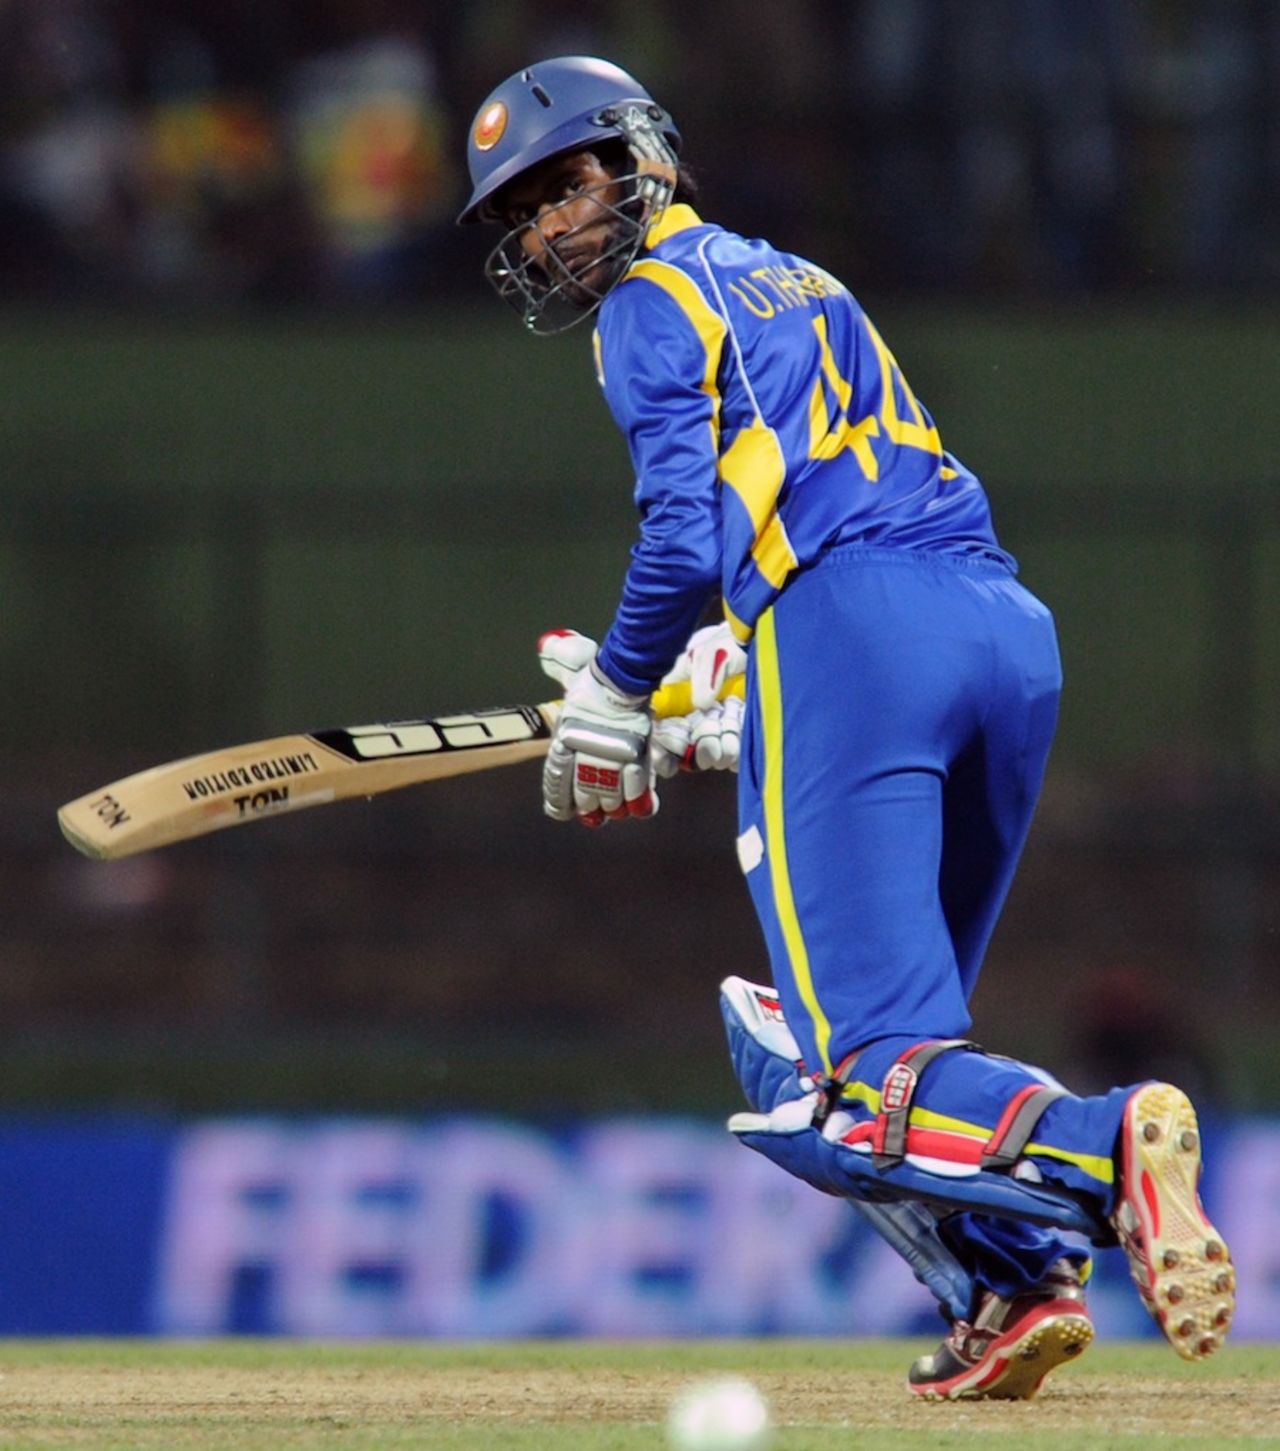 Upul Tharanga guides one behind point, Sri Lanka v India, 5th ODI, Pallekele, August 4, 2012